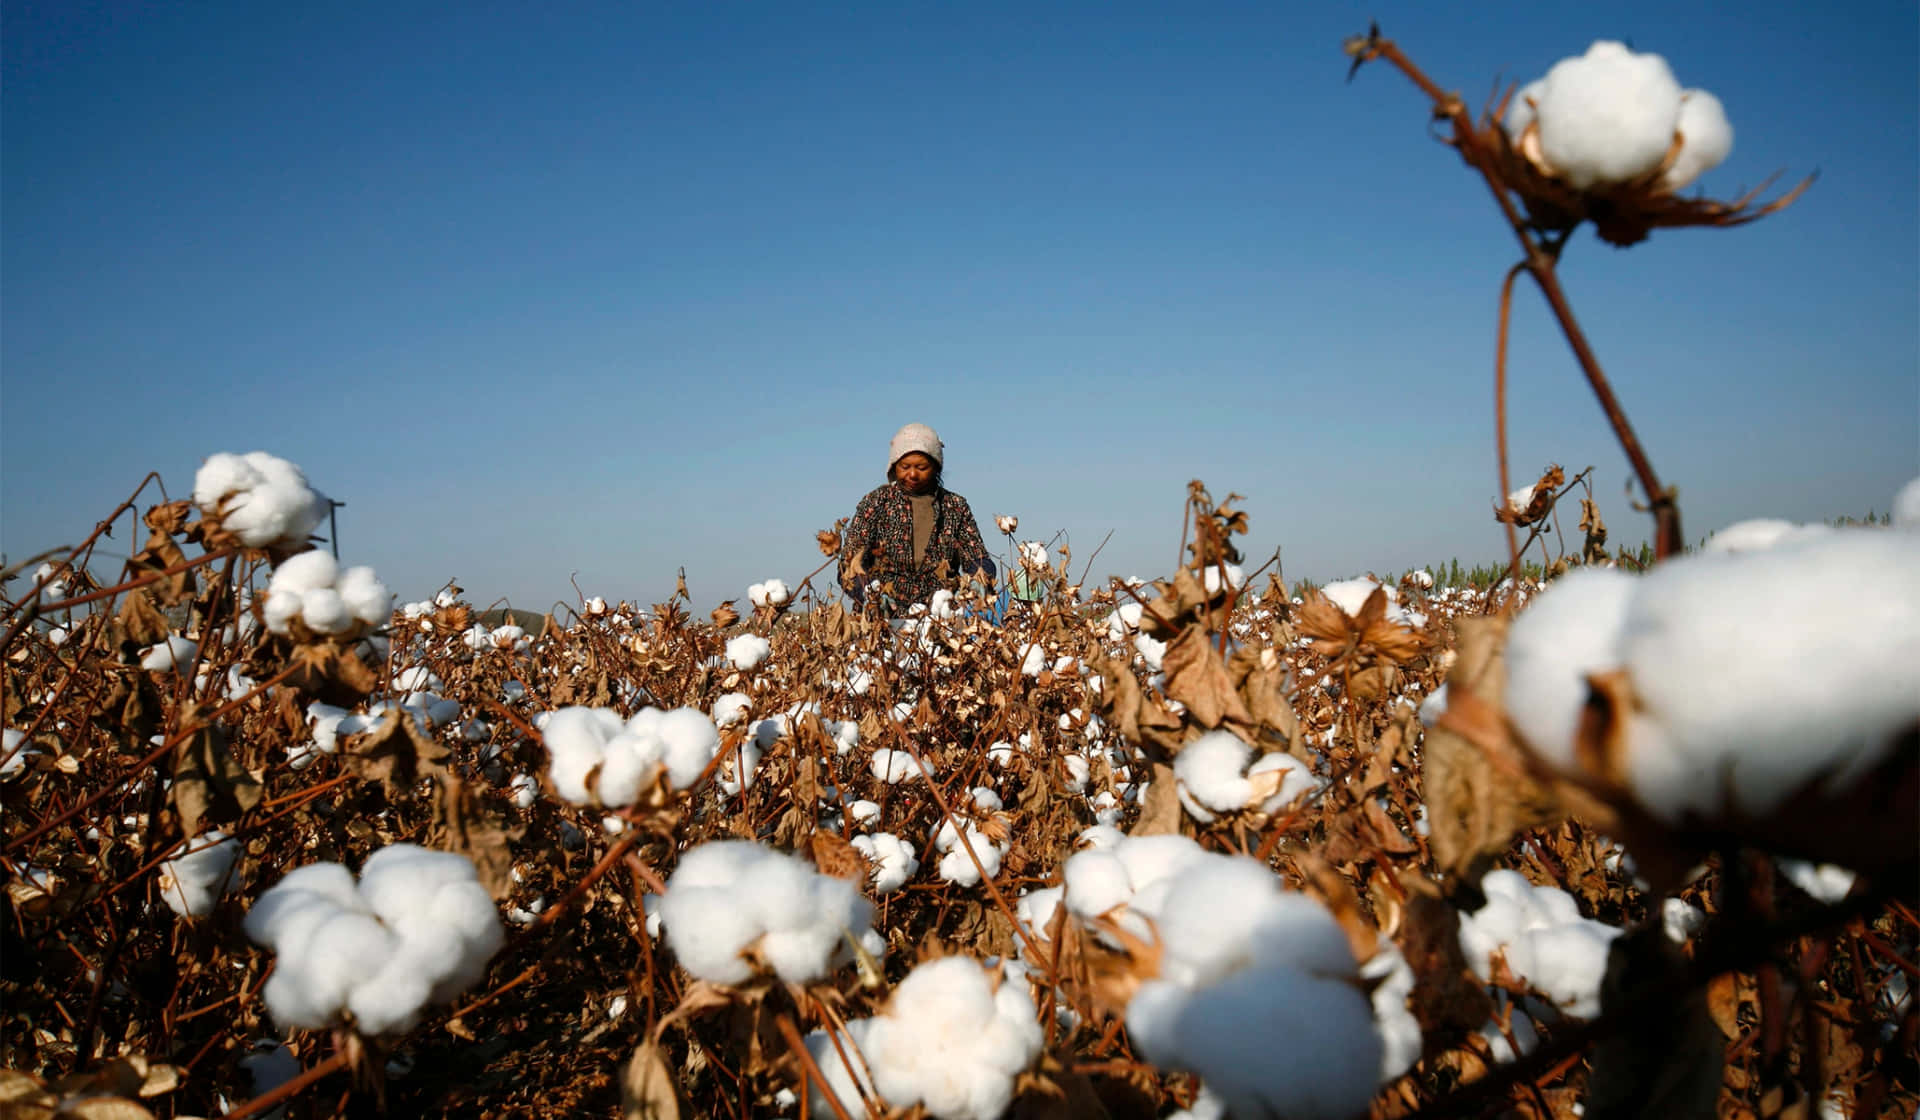 Enjoy the captivating scenery of a sun-dappled cotton field